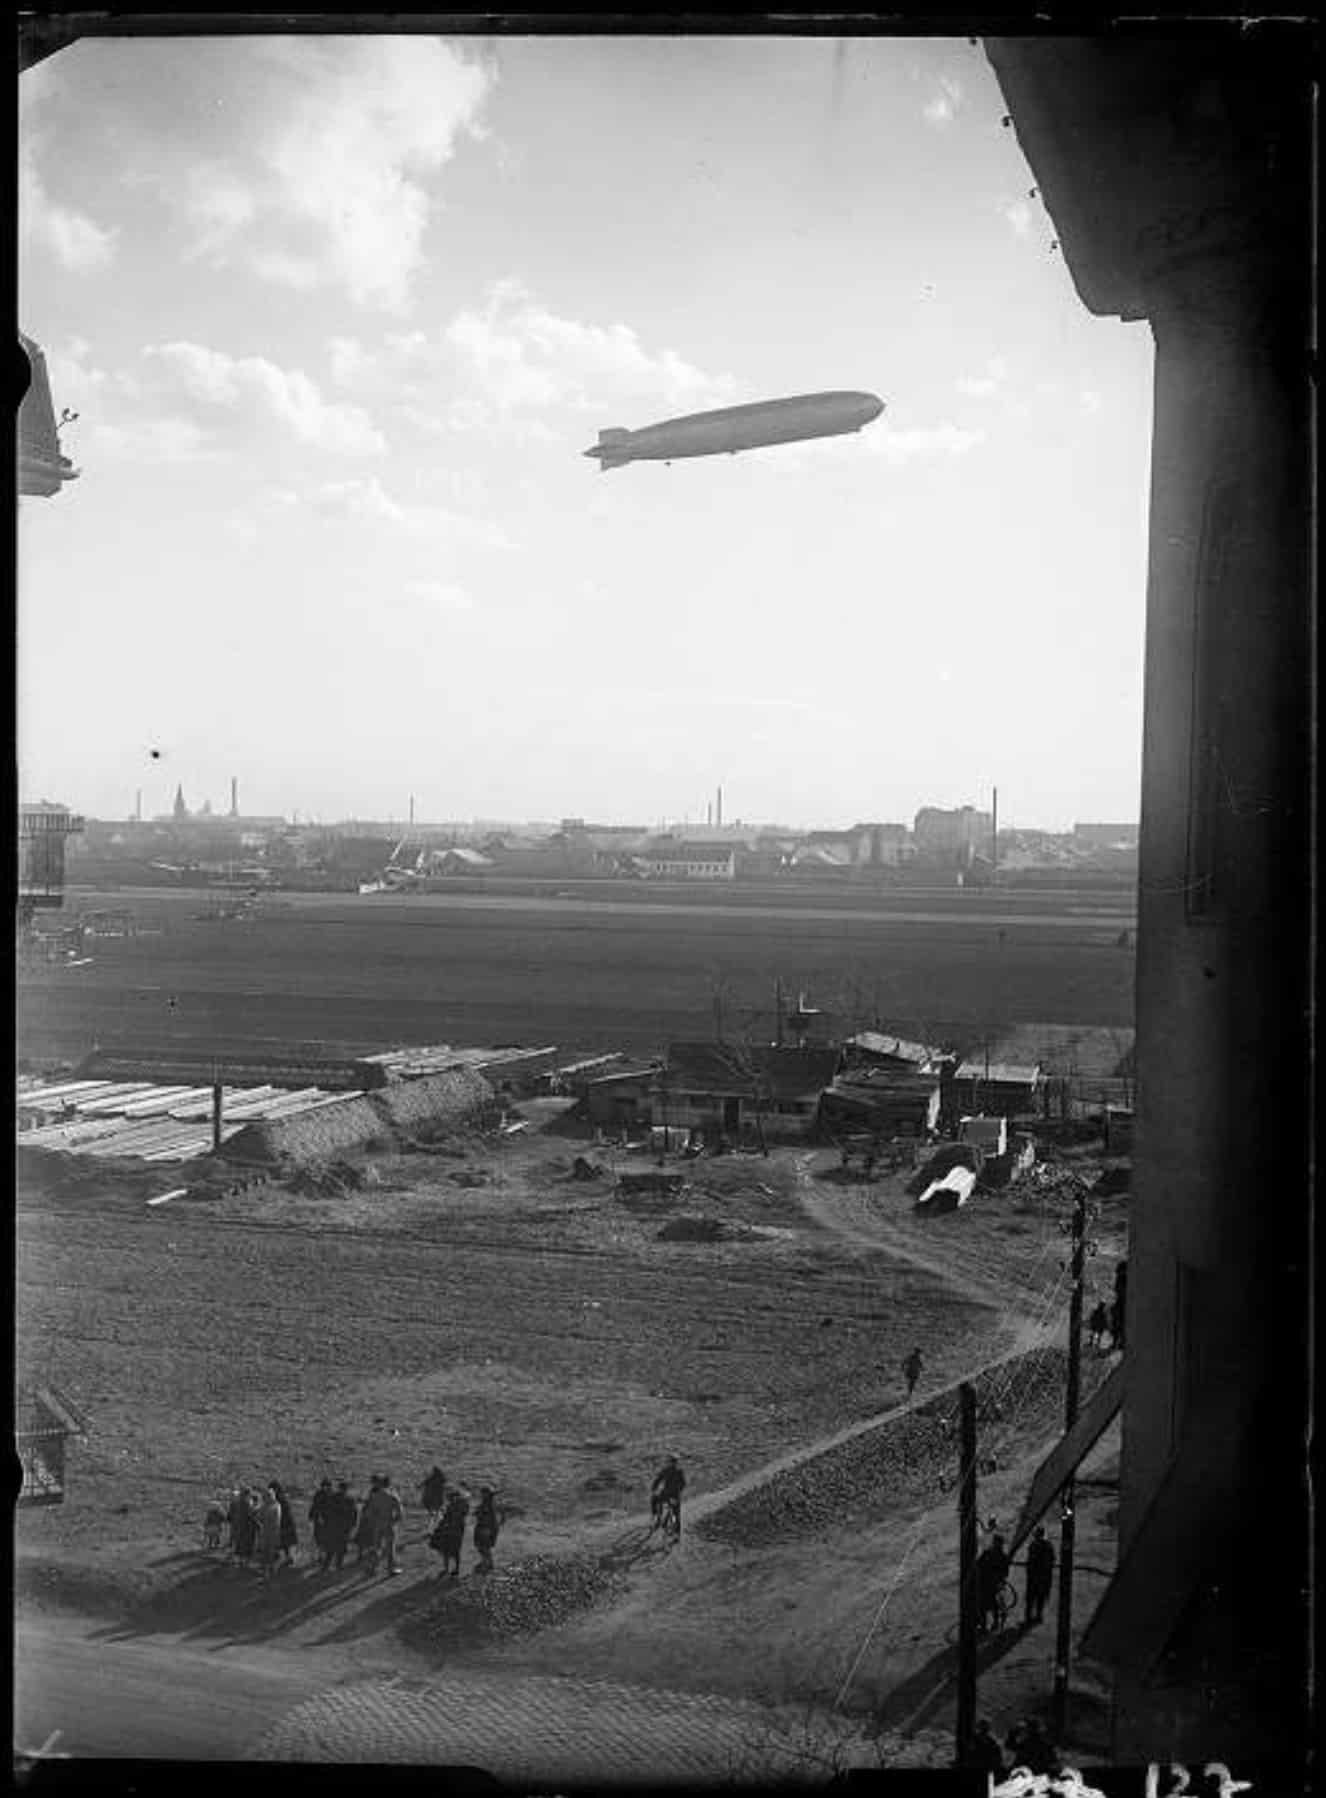 11b. Imre Kinszki, <em>Zeppelin léghajó Zugló felett</em> (« Le dirigeable Zeppelin au-dessus de Zugló »), 1931 © FSZEK